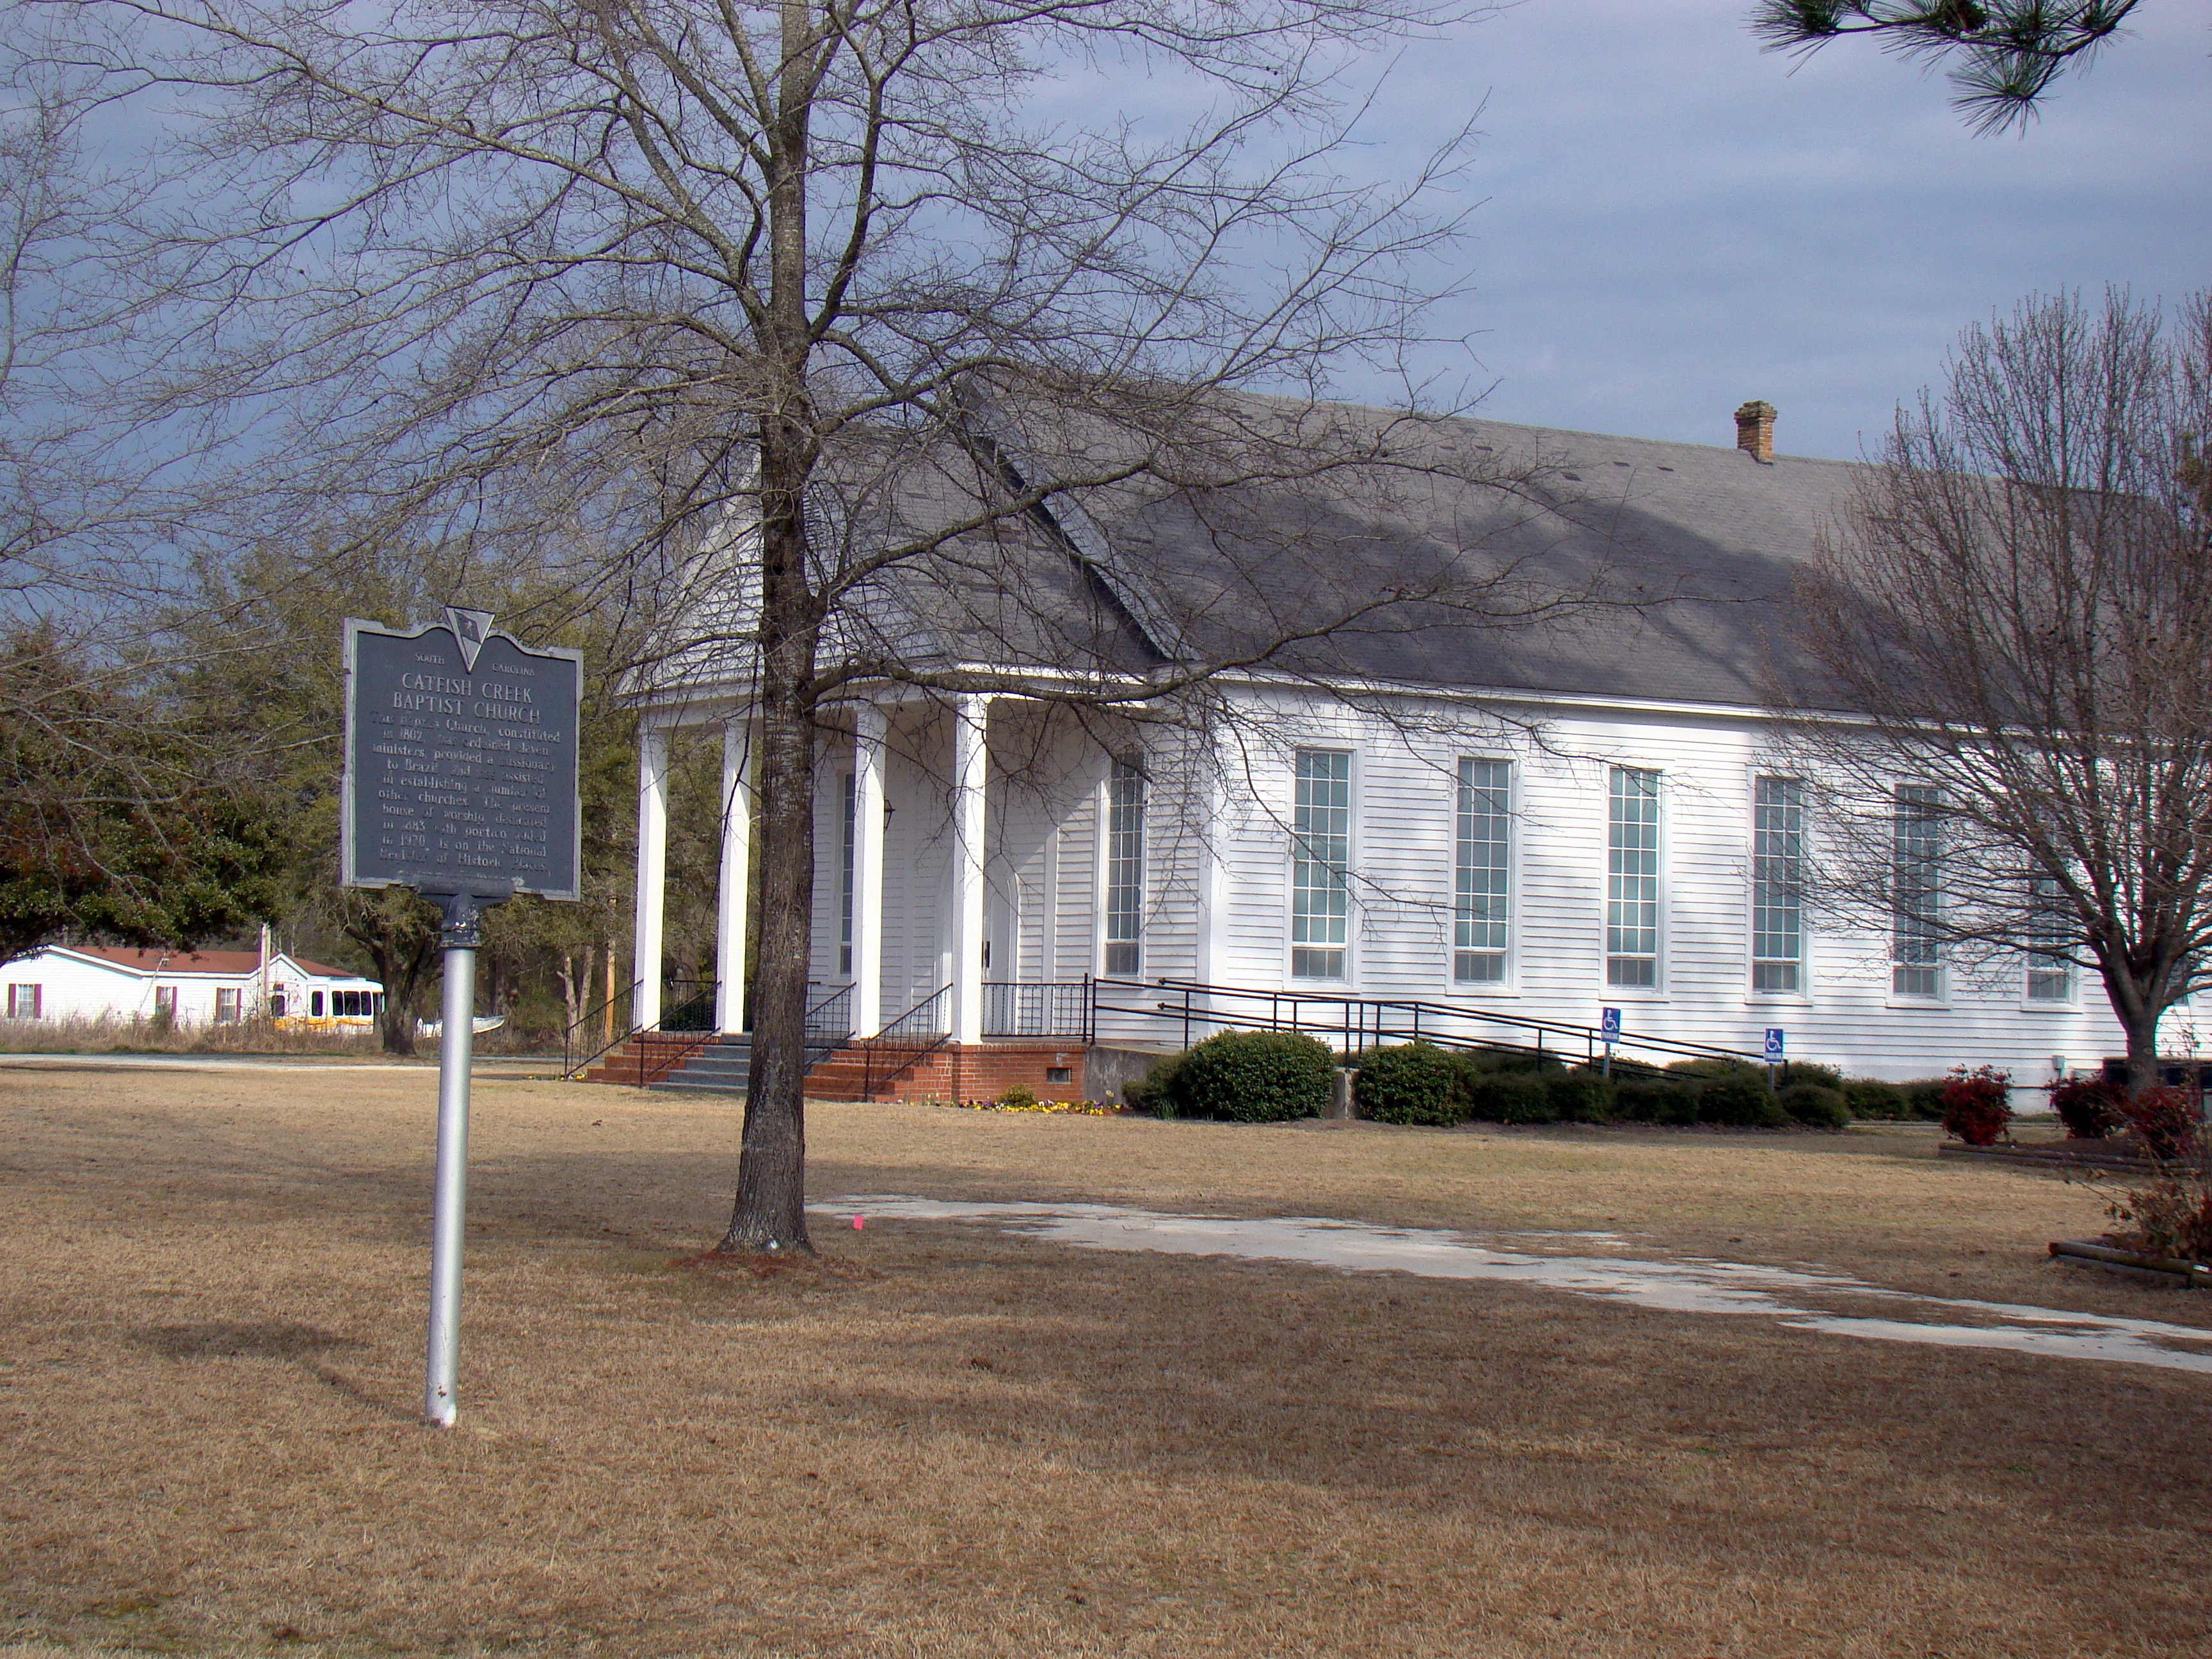 Catfish Creek Baptist Church and Marker